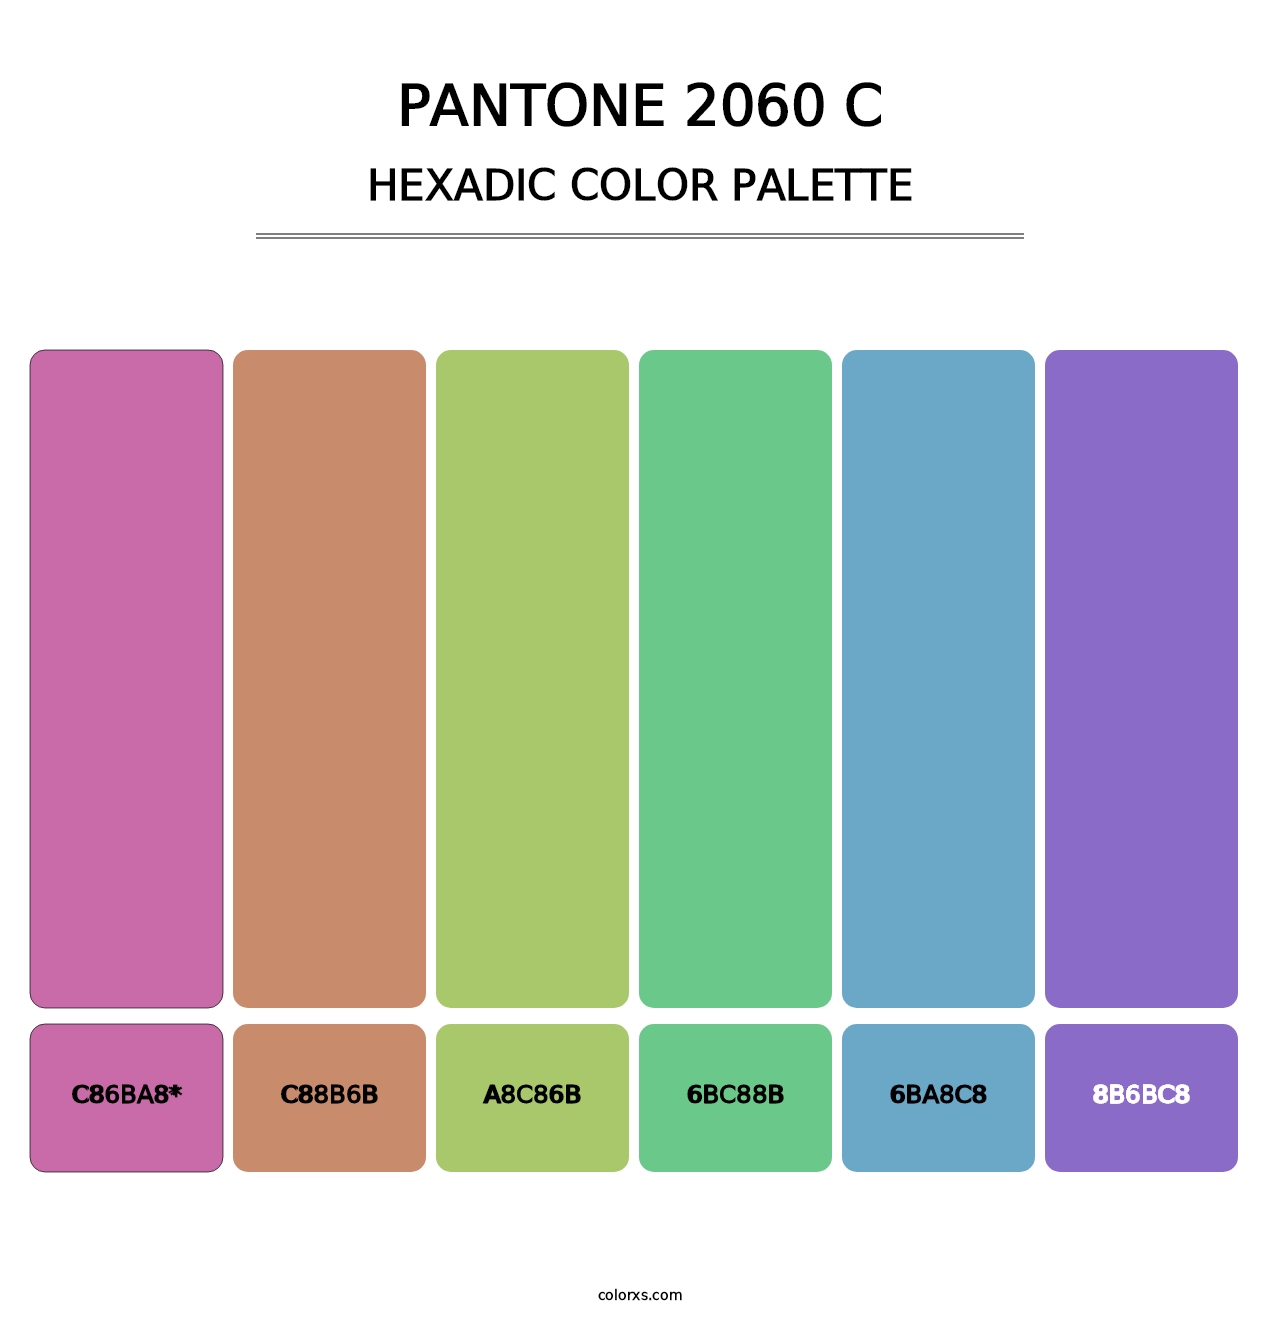 PANTONE 2060 C - Hexadic Color Palette